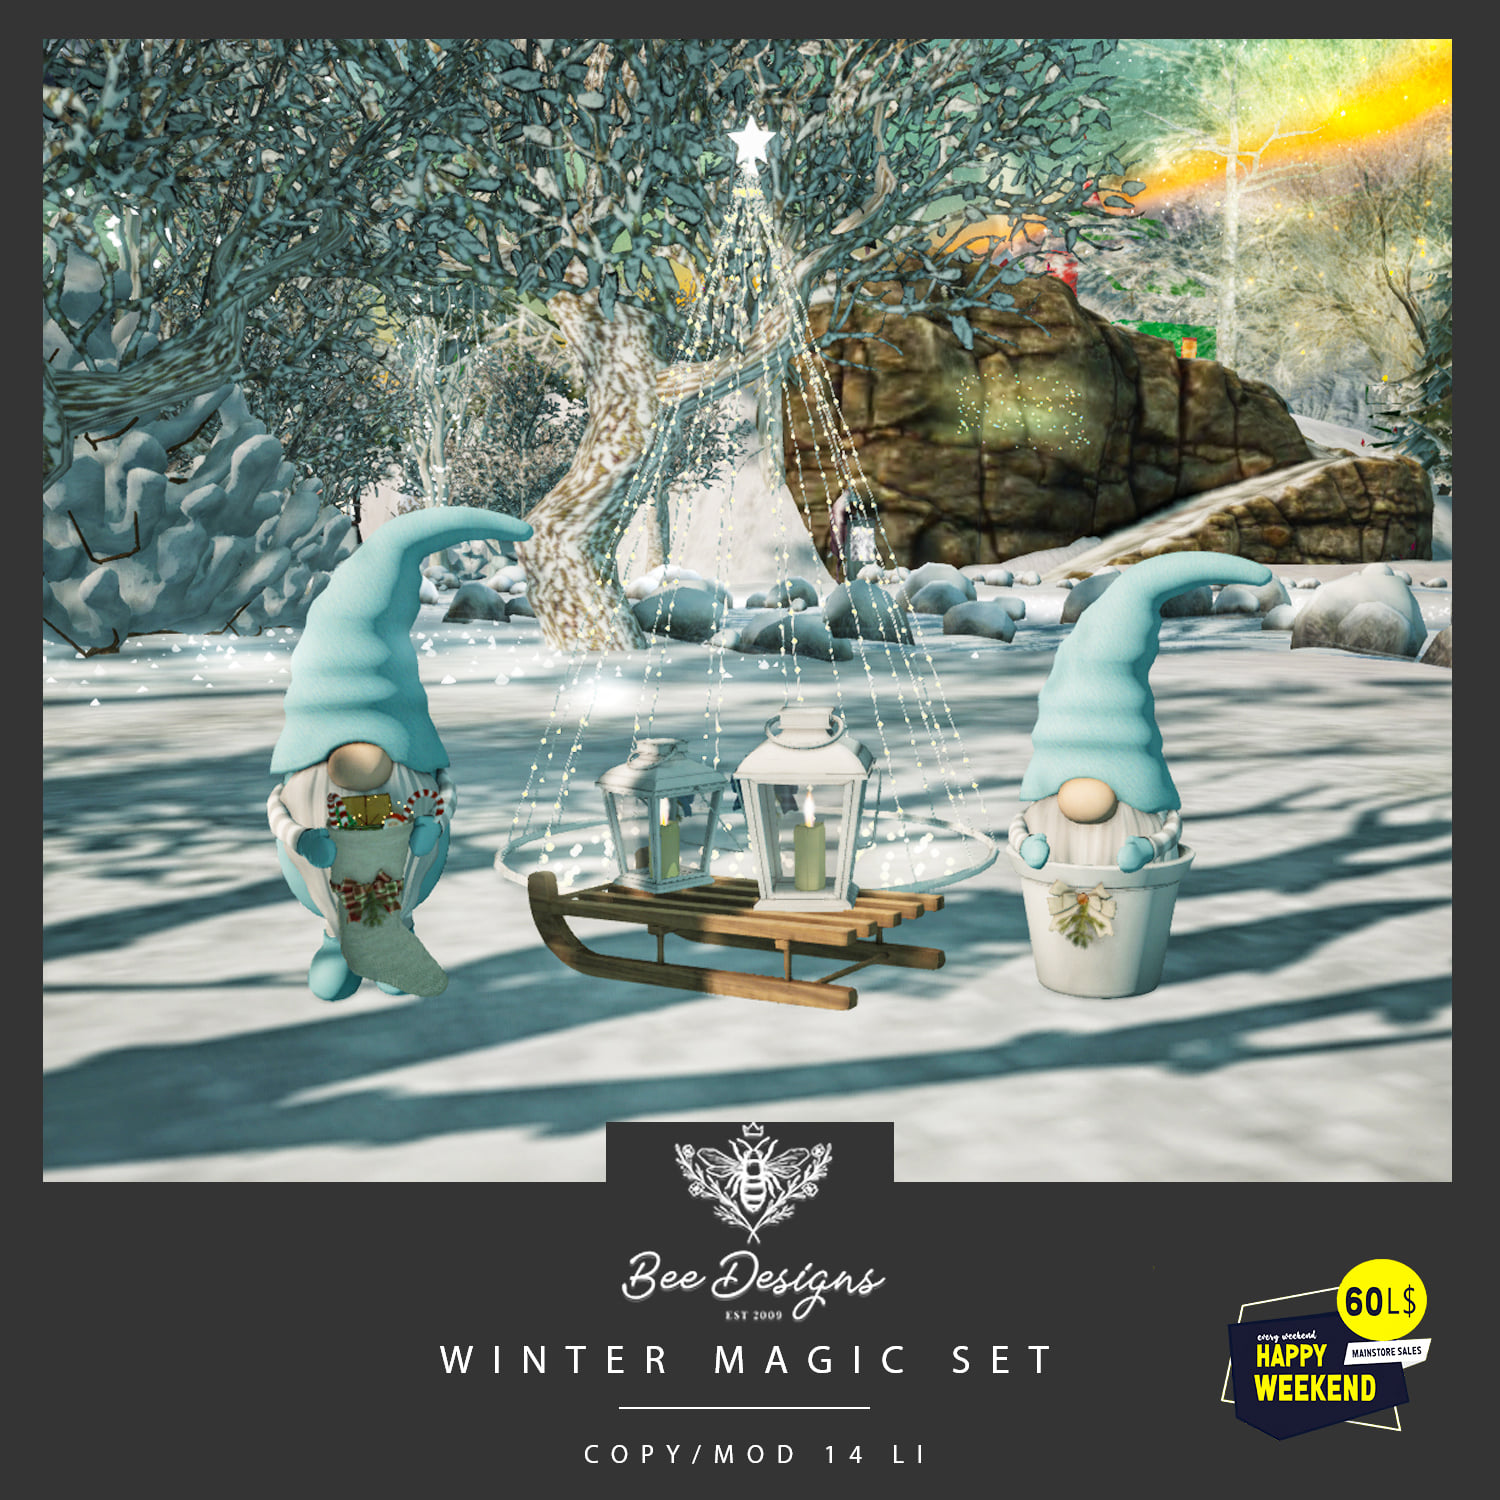 Bee Designs – Winter Magic Set